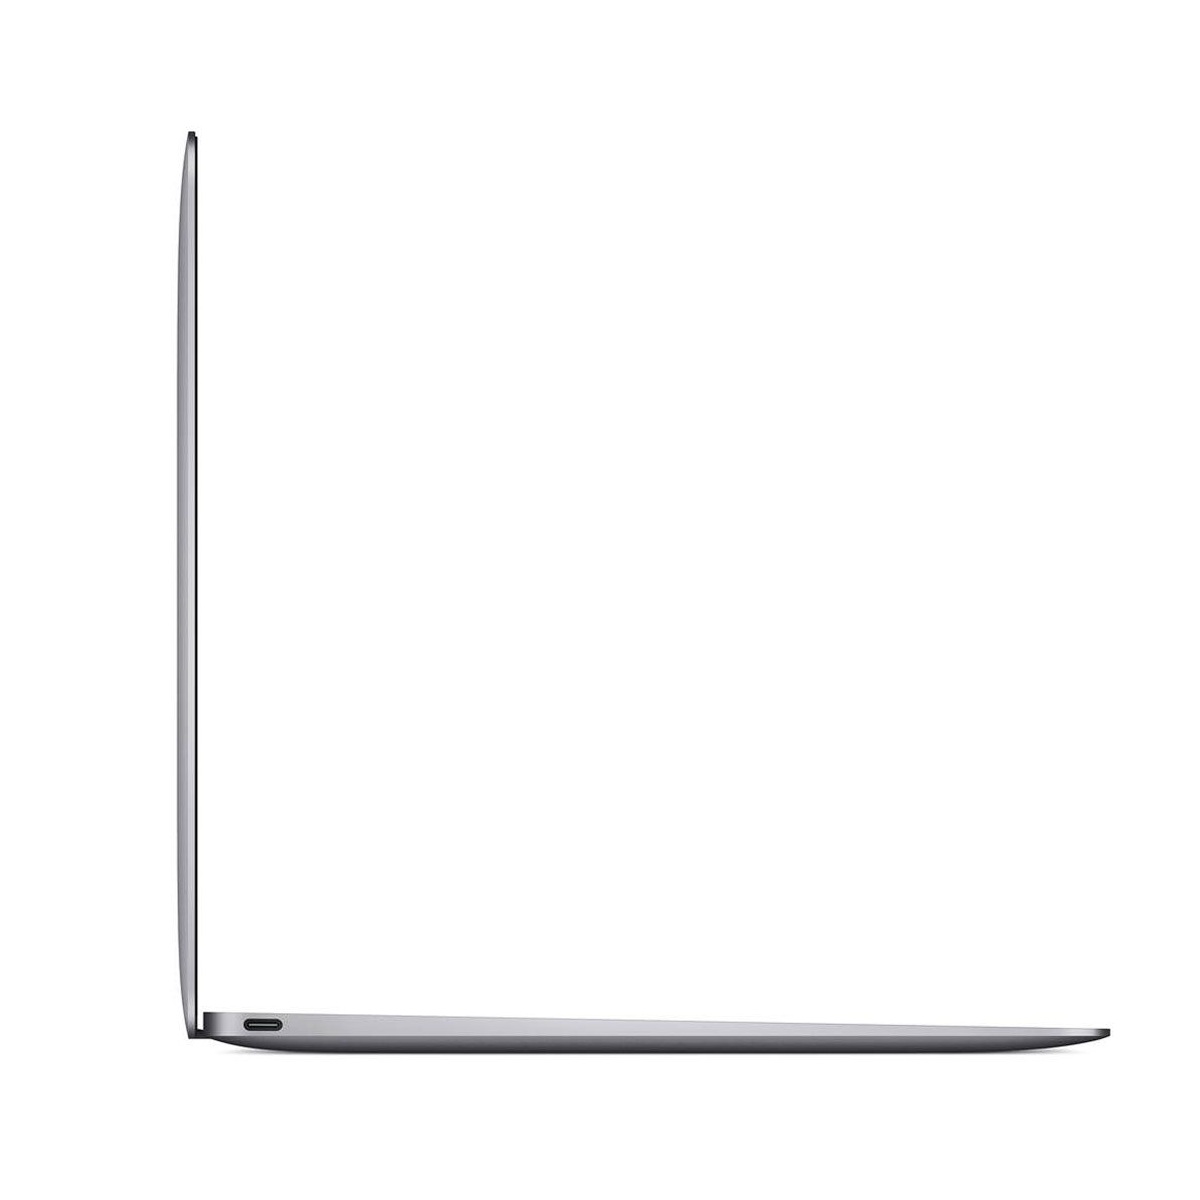 Ноутбук Apple MacBook 12 Early 2016 Space Grey (MLH72RU/A) (Intel Core m3 1100 MHz/12.0/2304x1440/8.0Gb/256Gb SSD/DVD нет/Intel HD Graphics 515/Wi-Fi/Bluetooth/MacOS X)